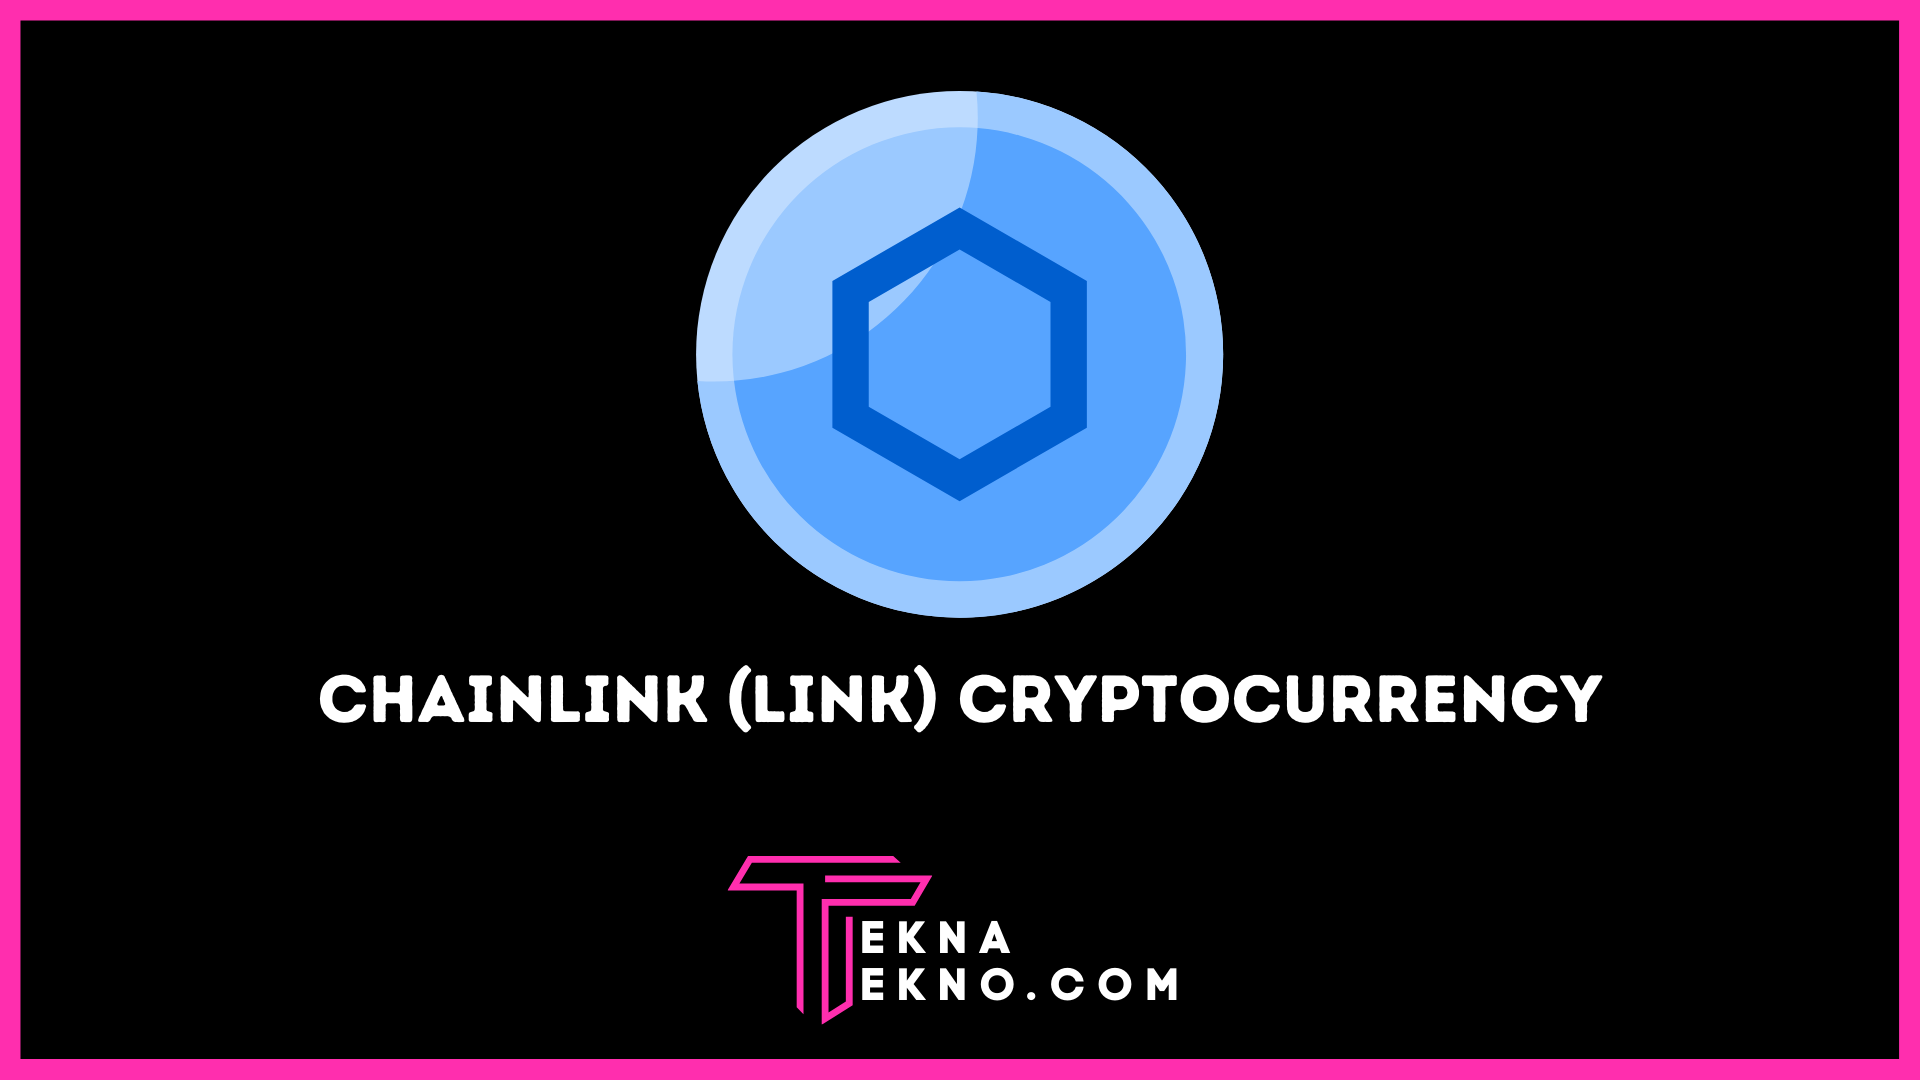 Chainlink (LINK) Cryptocurrency: Cara Kerja dan Fiturnya